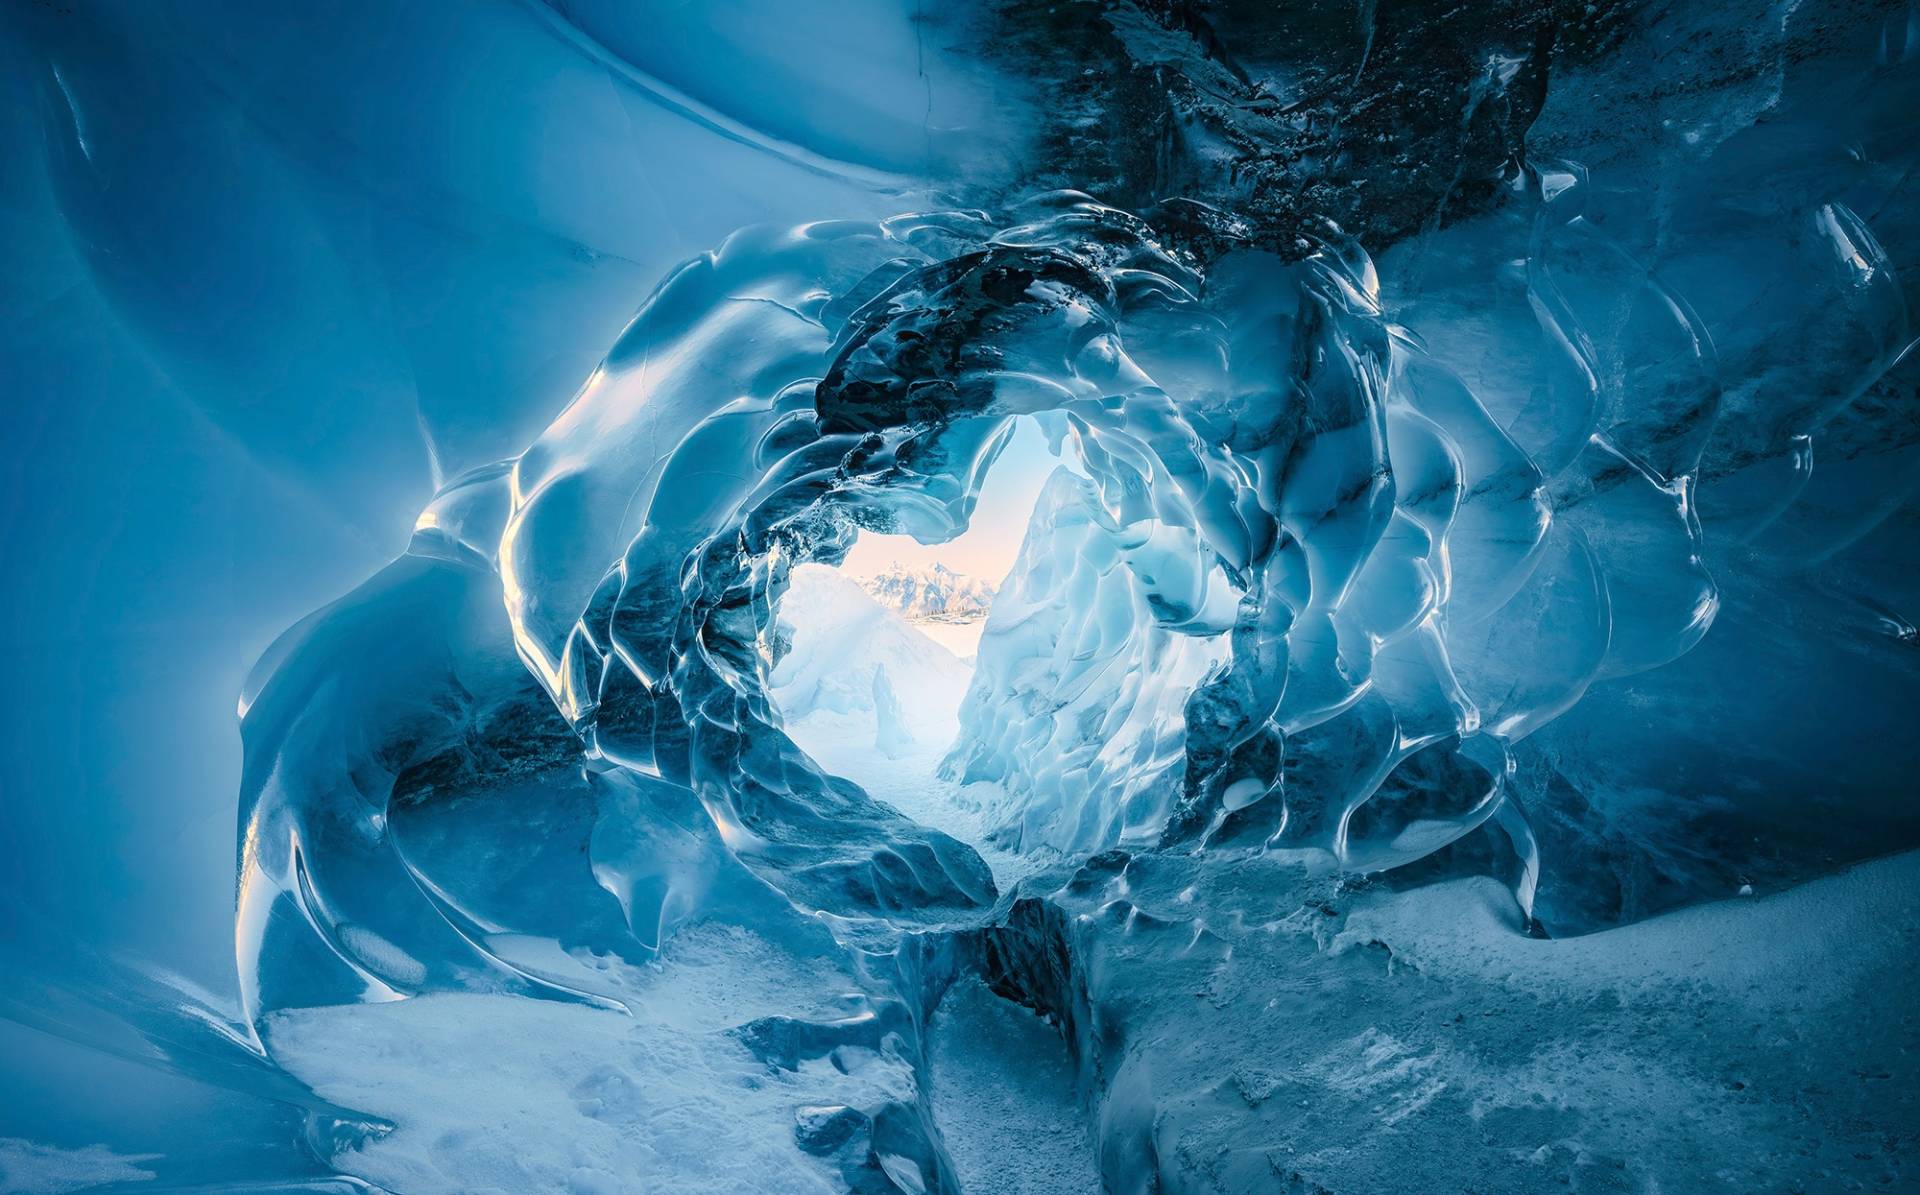 Komar Vliestapete »The Eye of the Glacier« von Komar